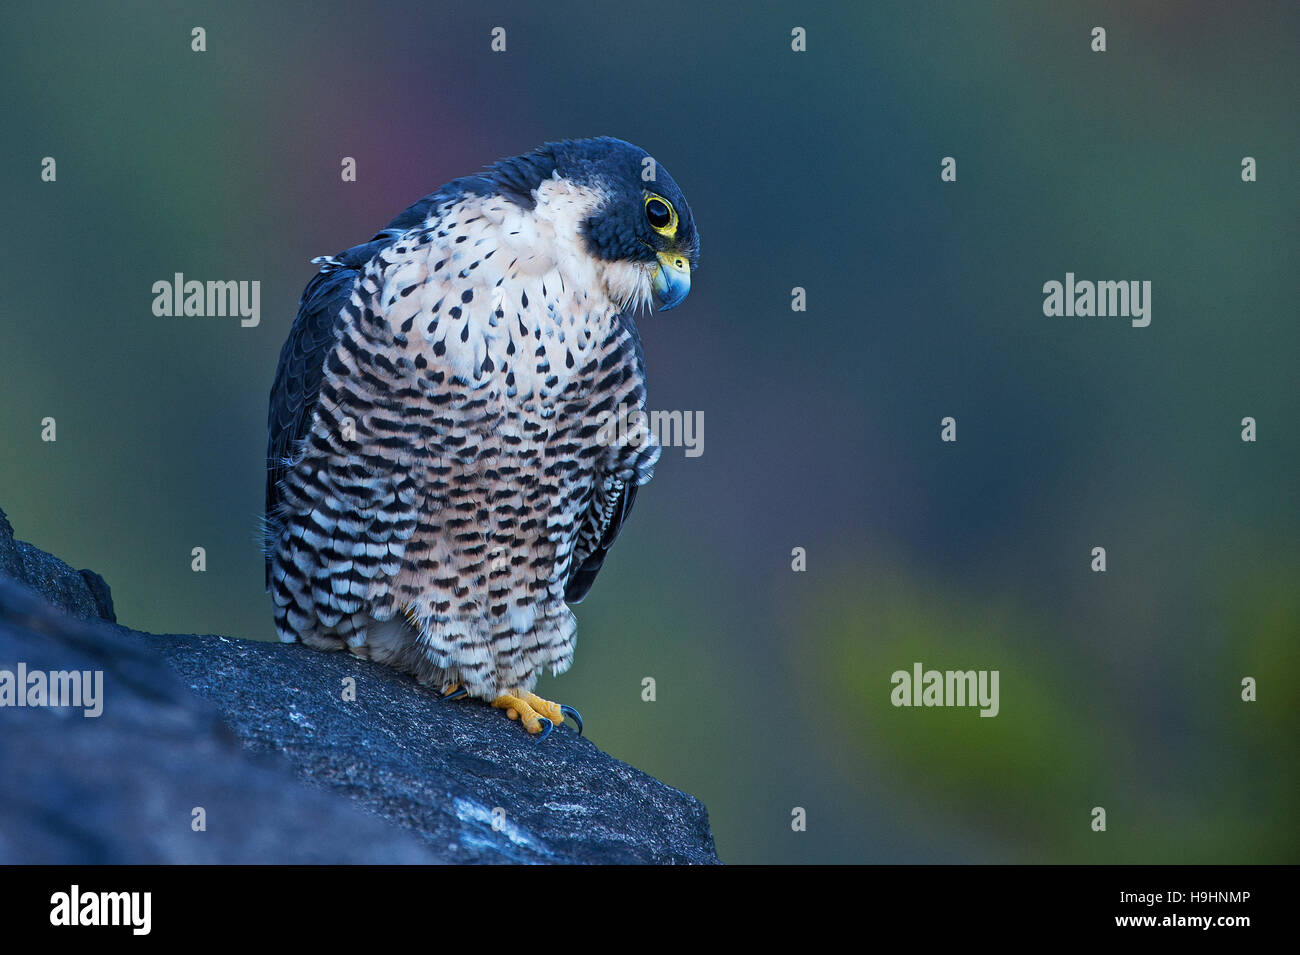 Adult peregrine falcon on ledge Stock Photo